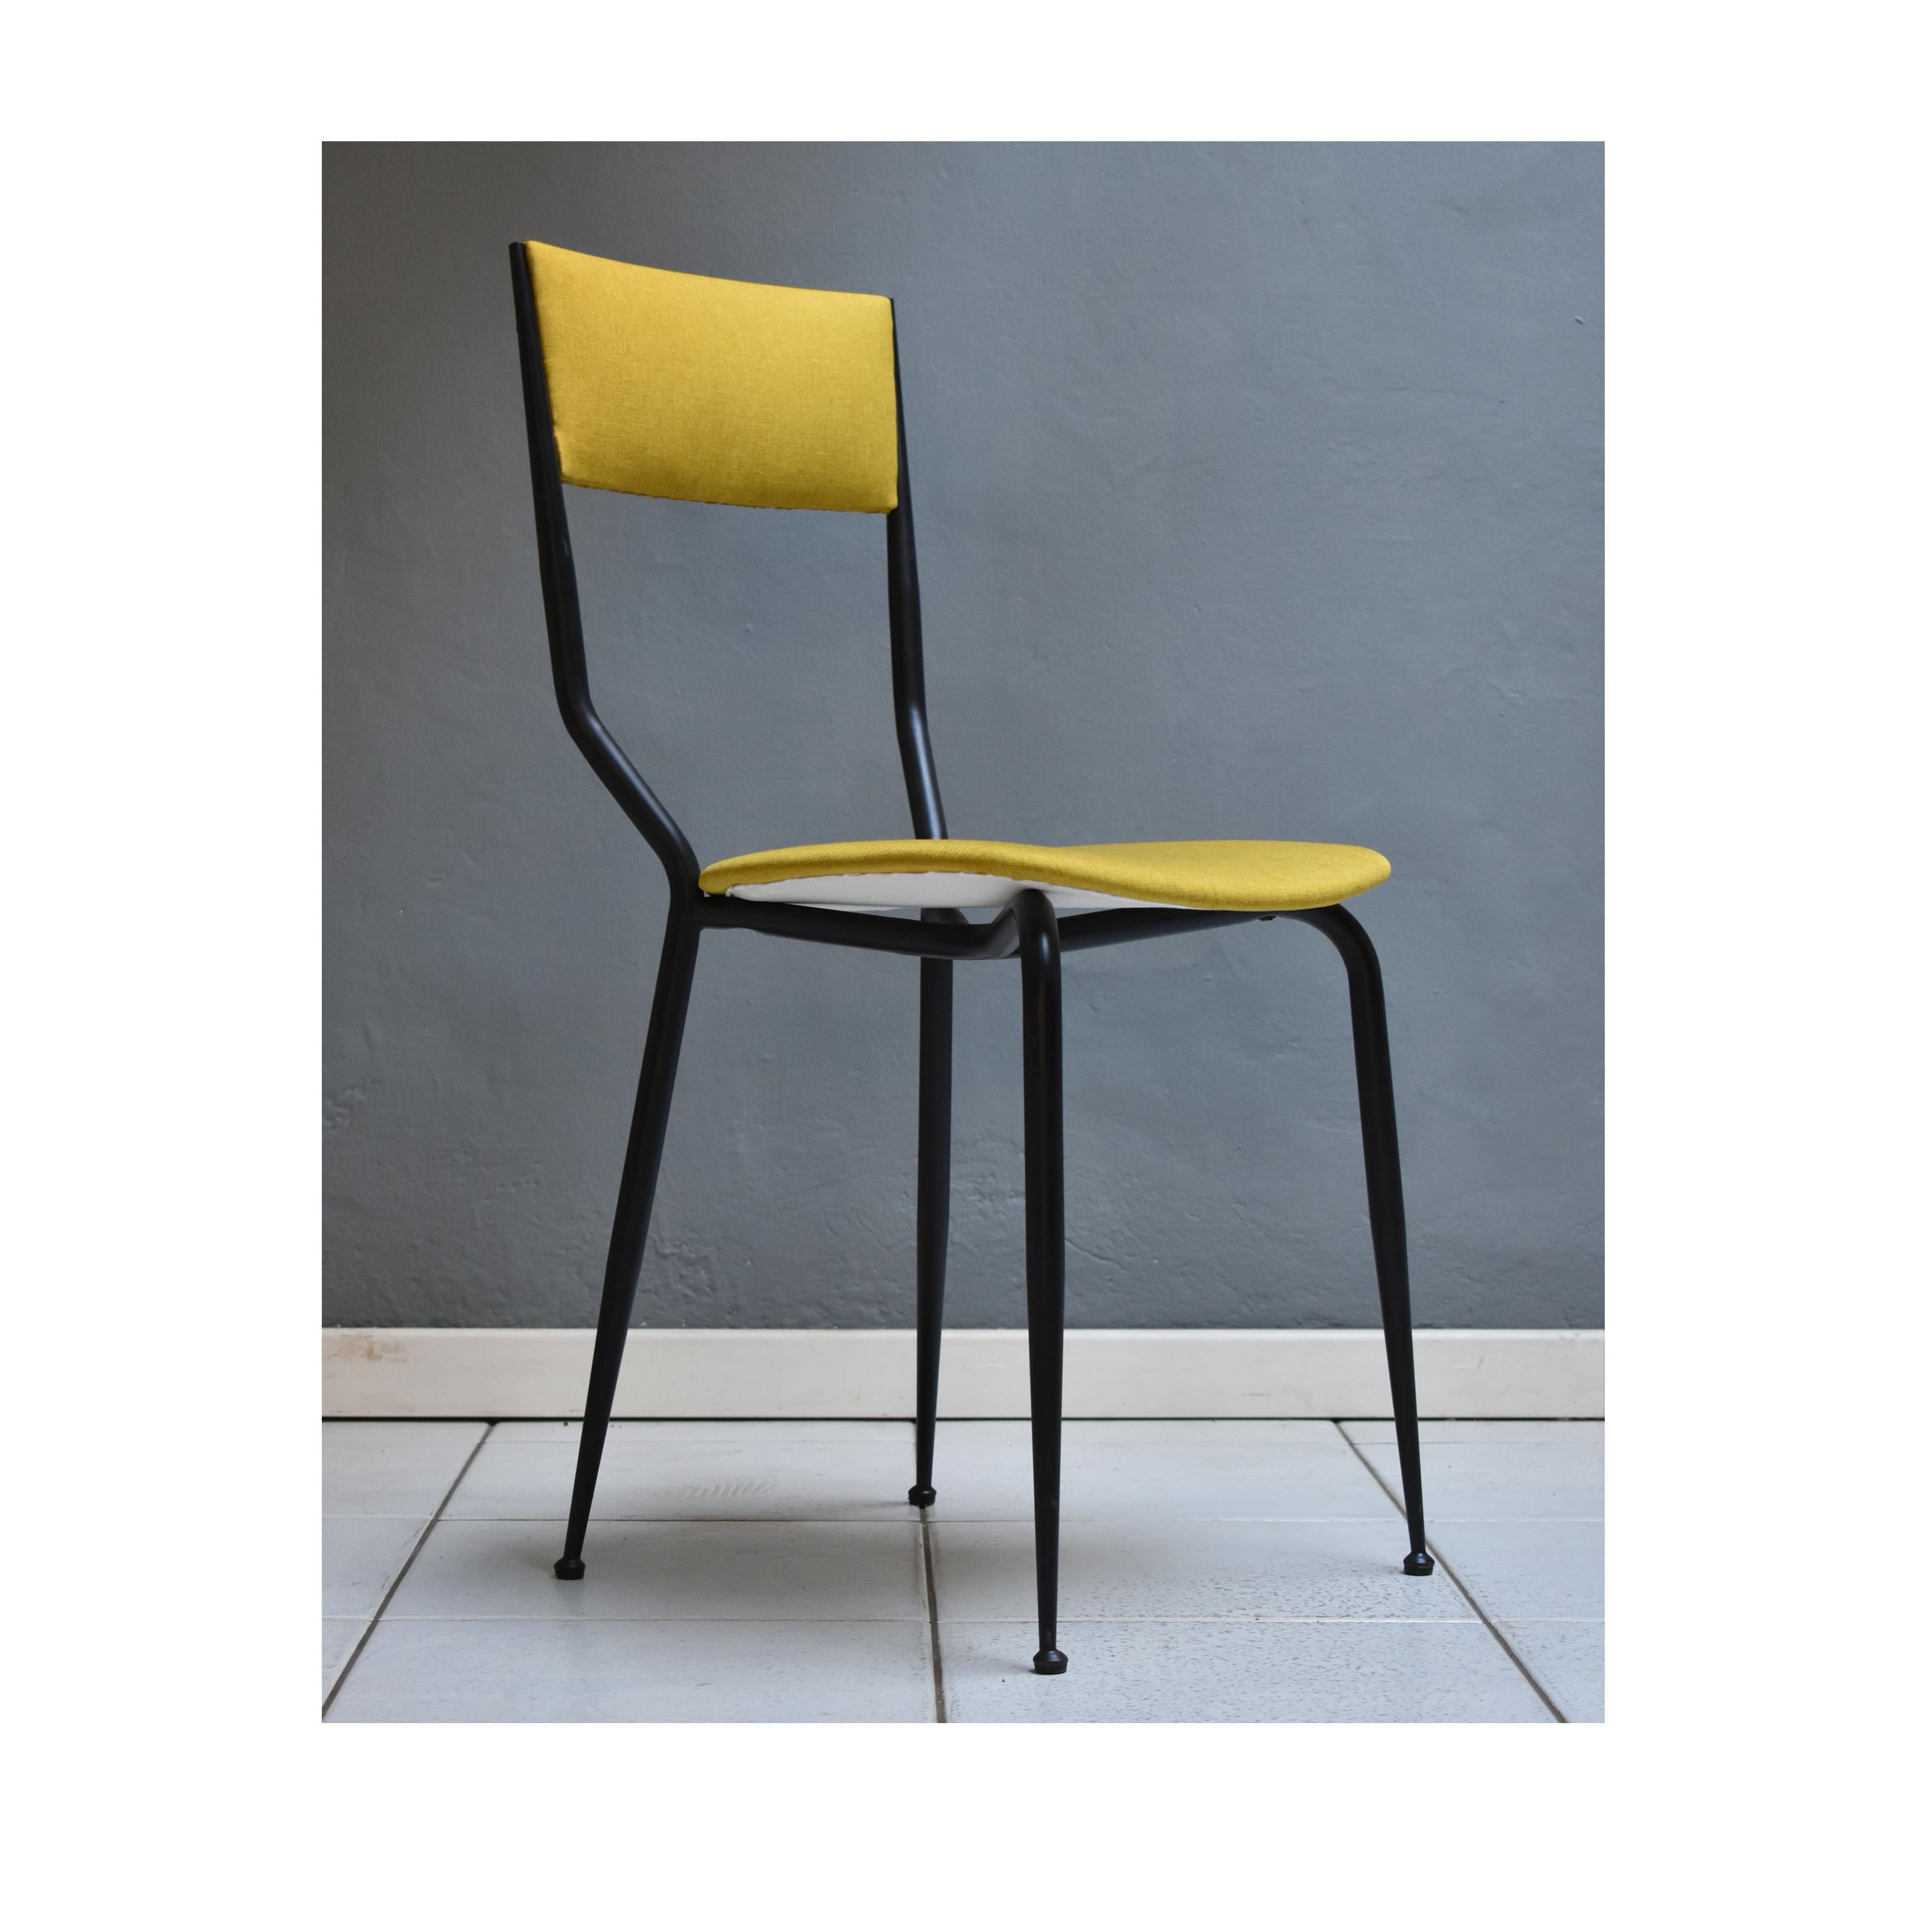 Milieu du XXe siècle The Moderns Modernity Italian 6 Dining Chairs 1960 Black Iron Structure OcherFabric